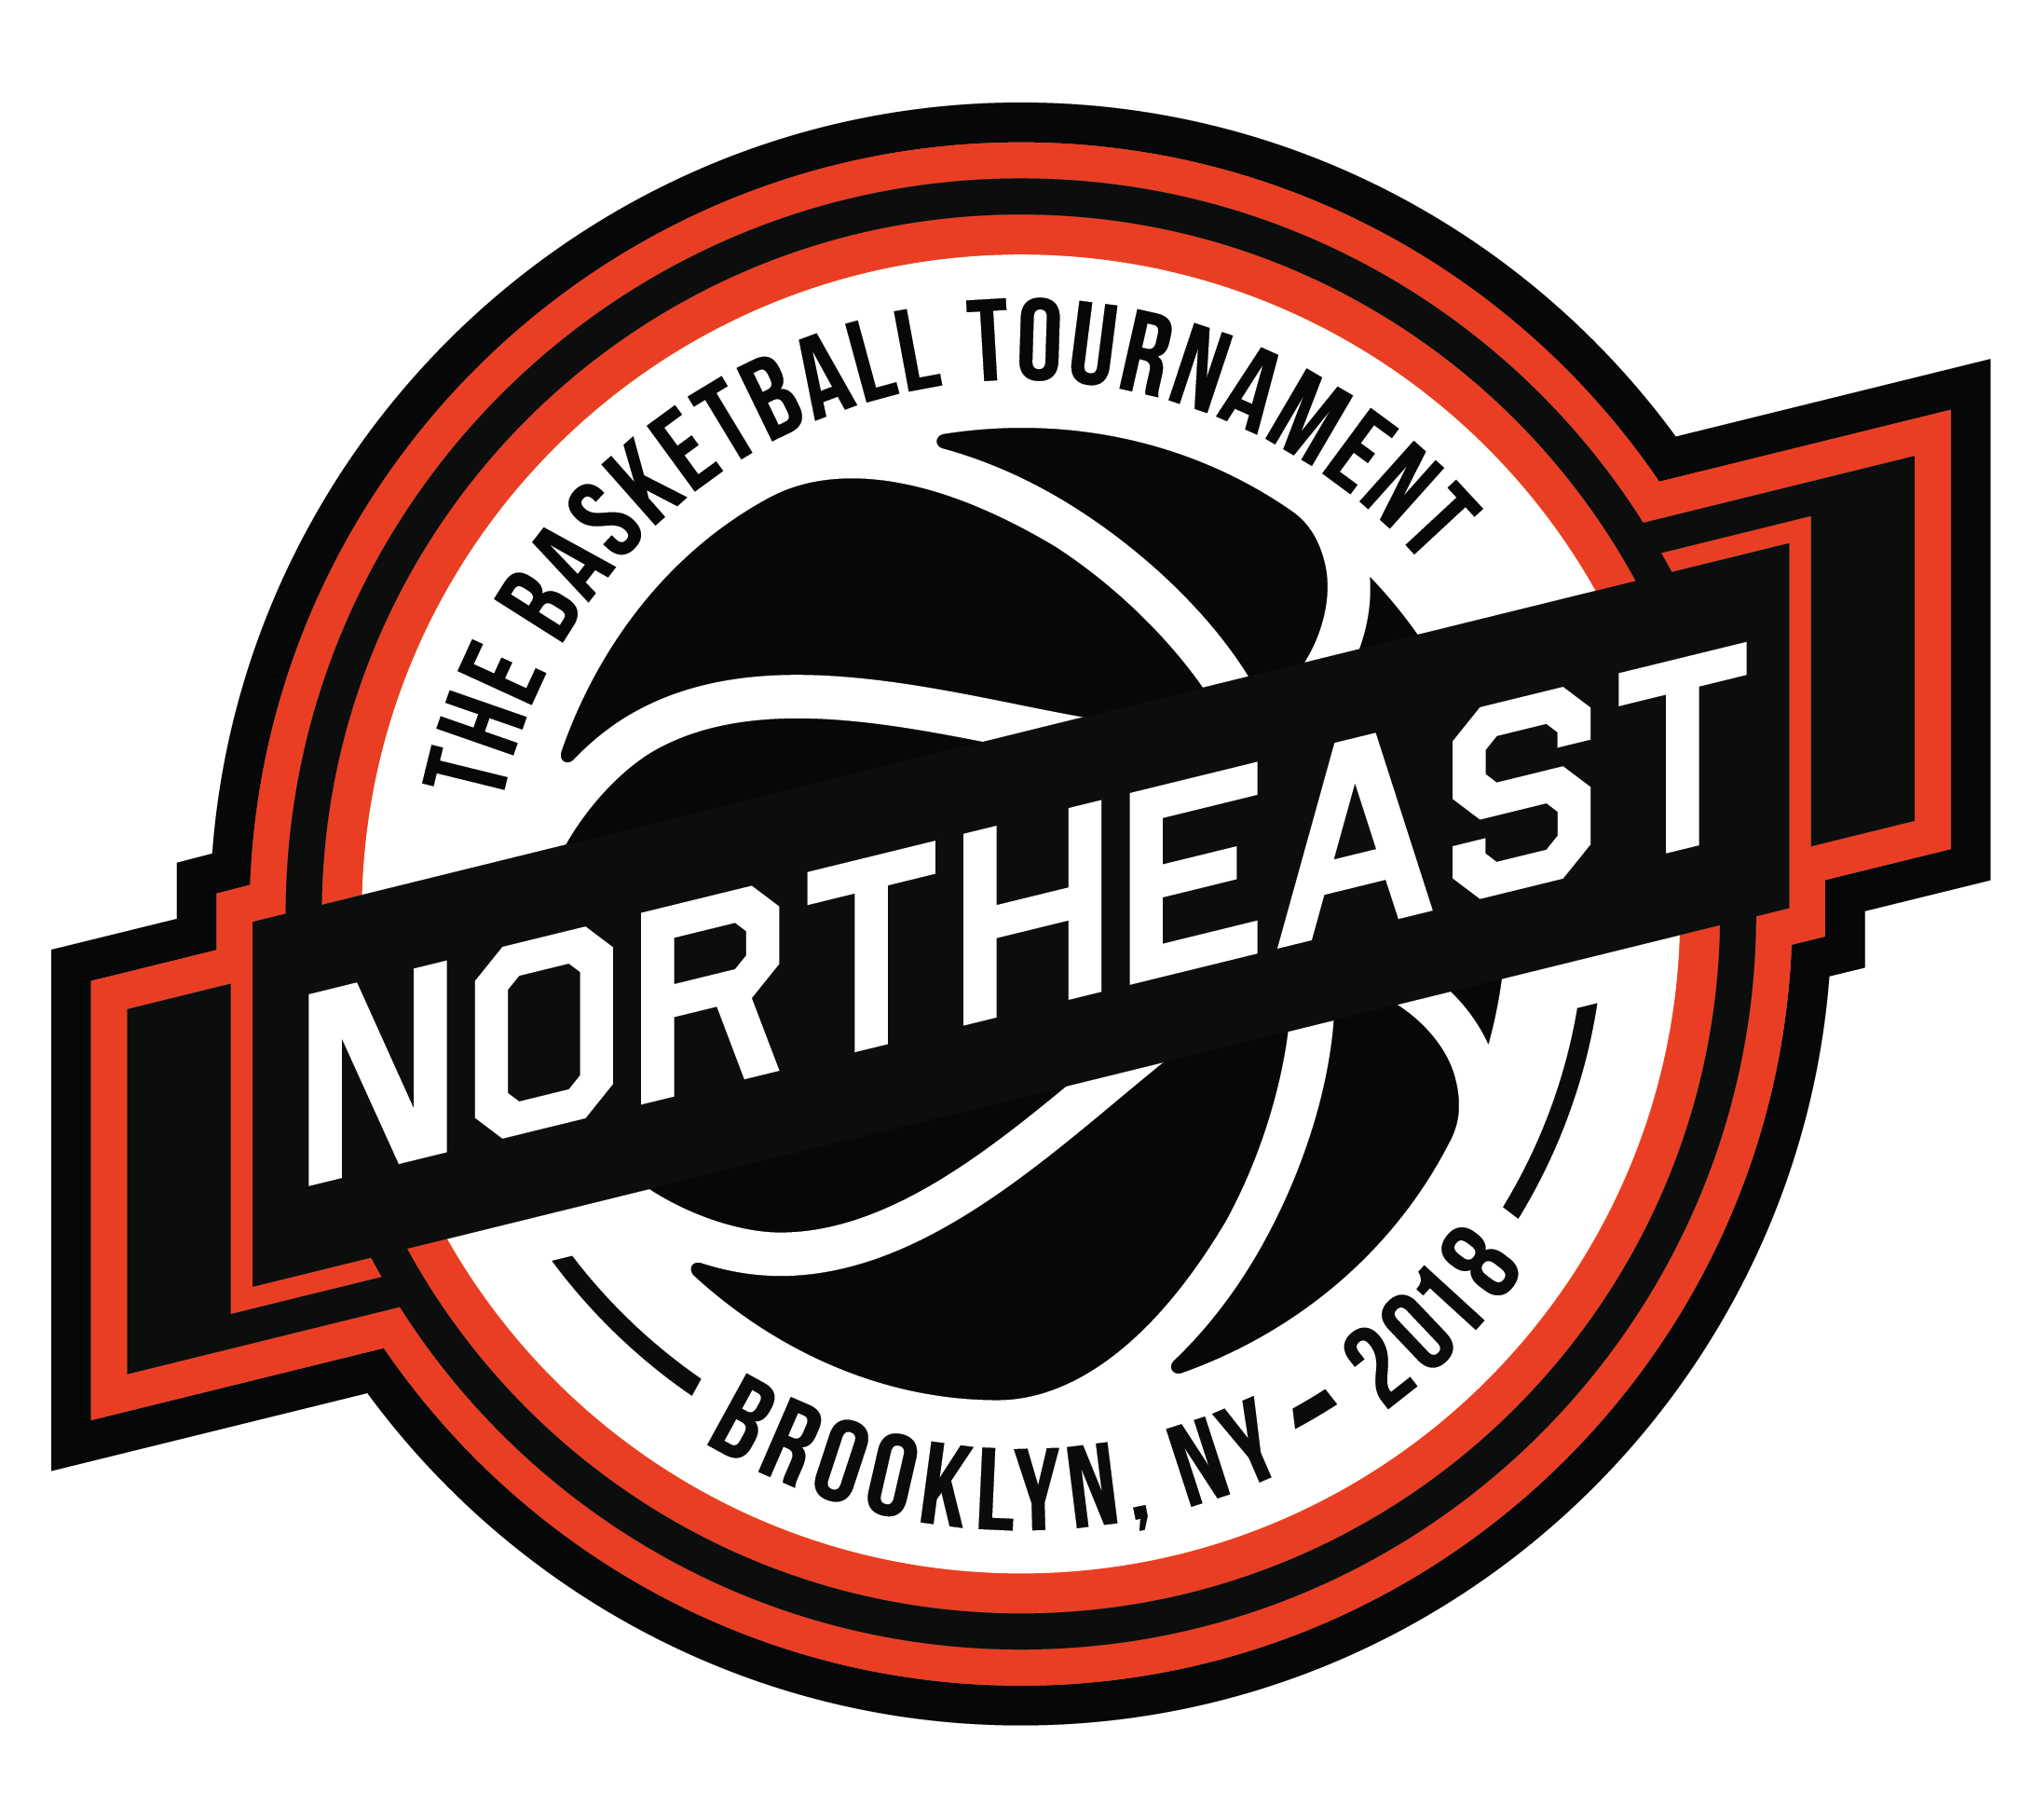 TBT Logo - Northeast Team Logos Unveiled for TBT 2018. The Basketball Tournament